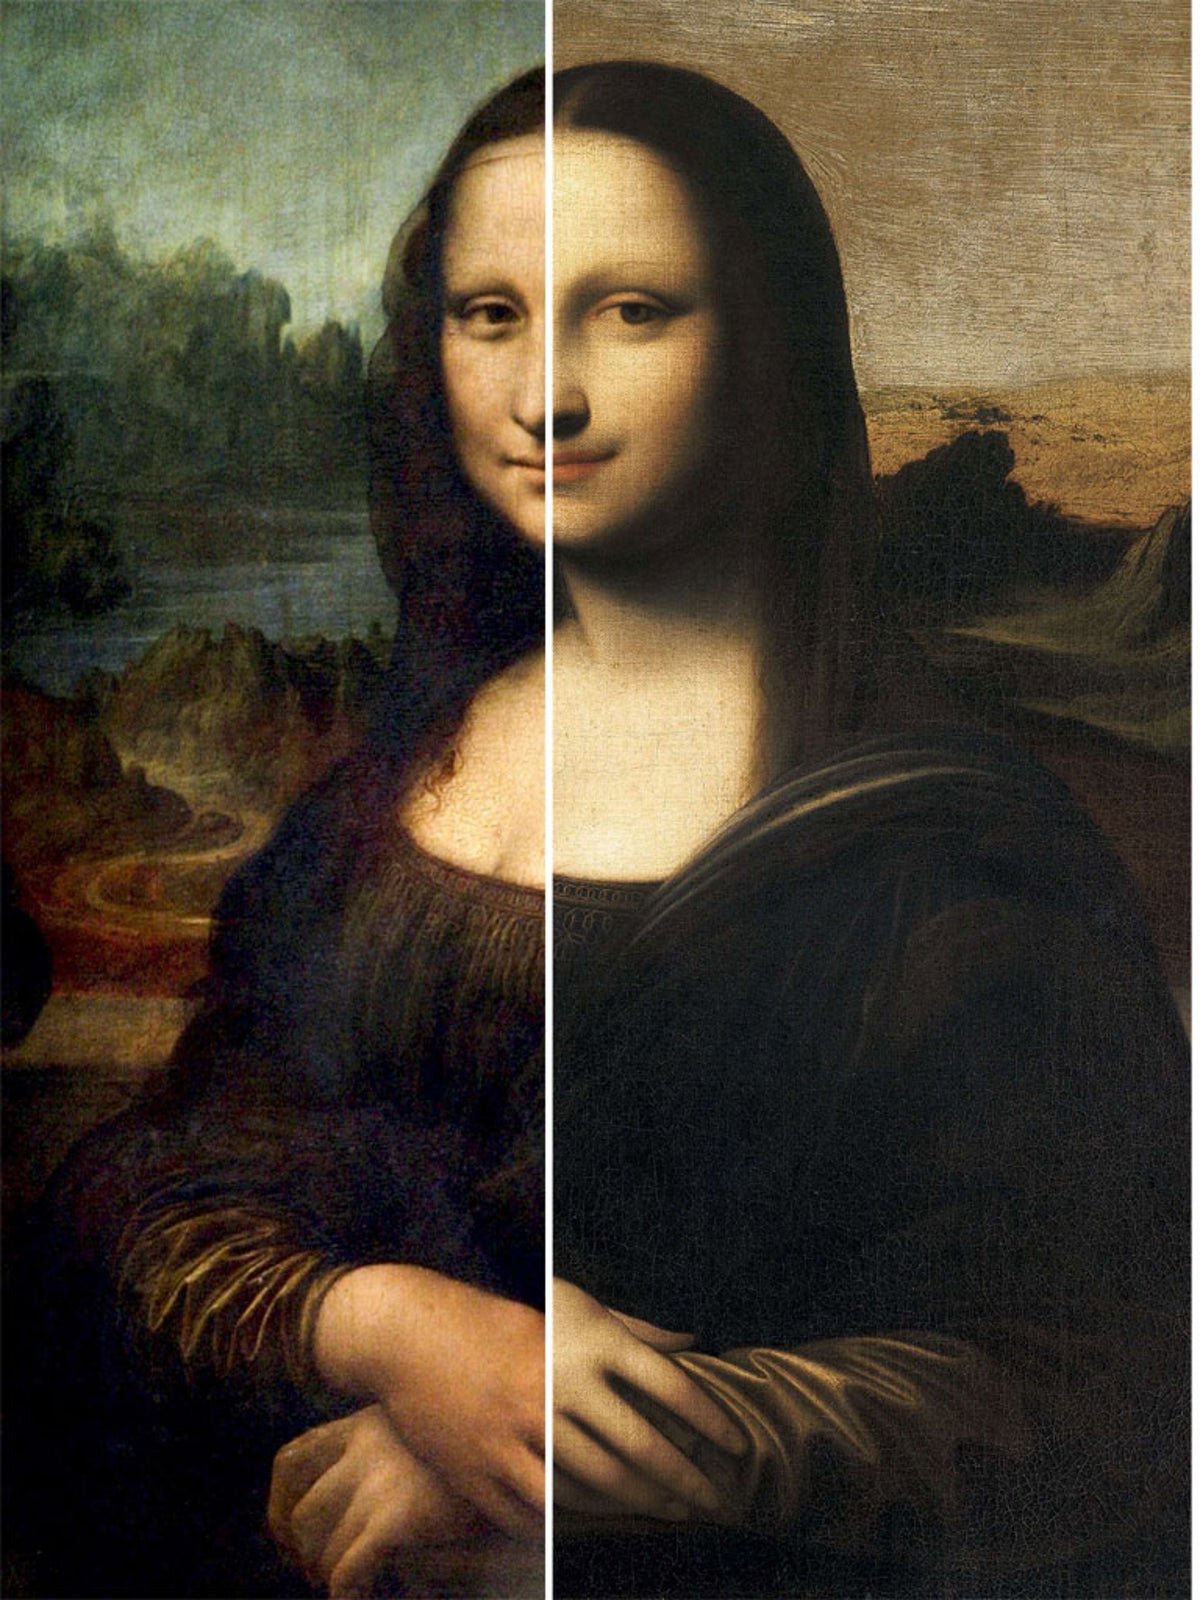 The 'Prado Mona Lisa' - The Mona Lisa Foundation